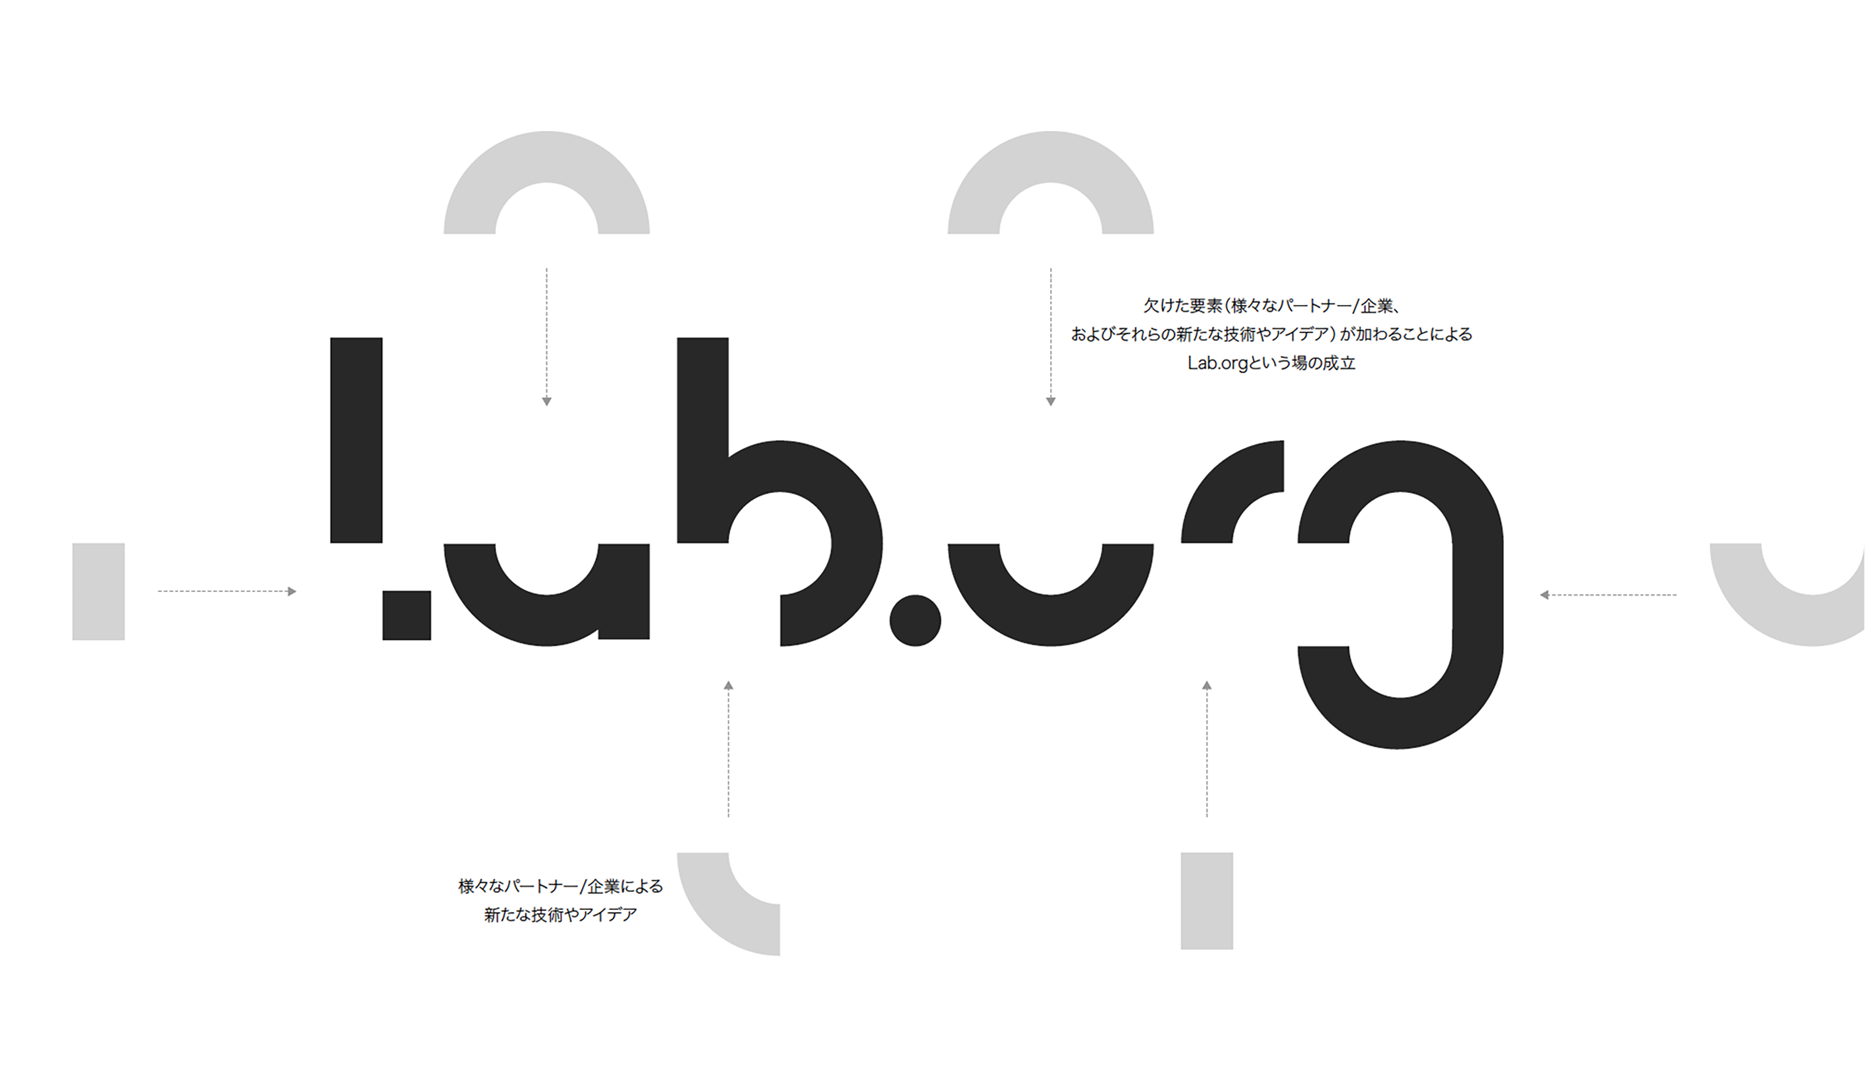 Lab.org logo 解説